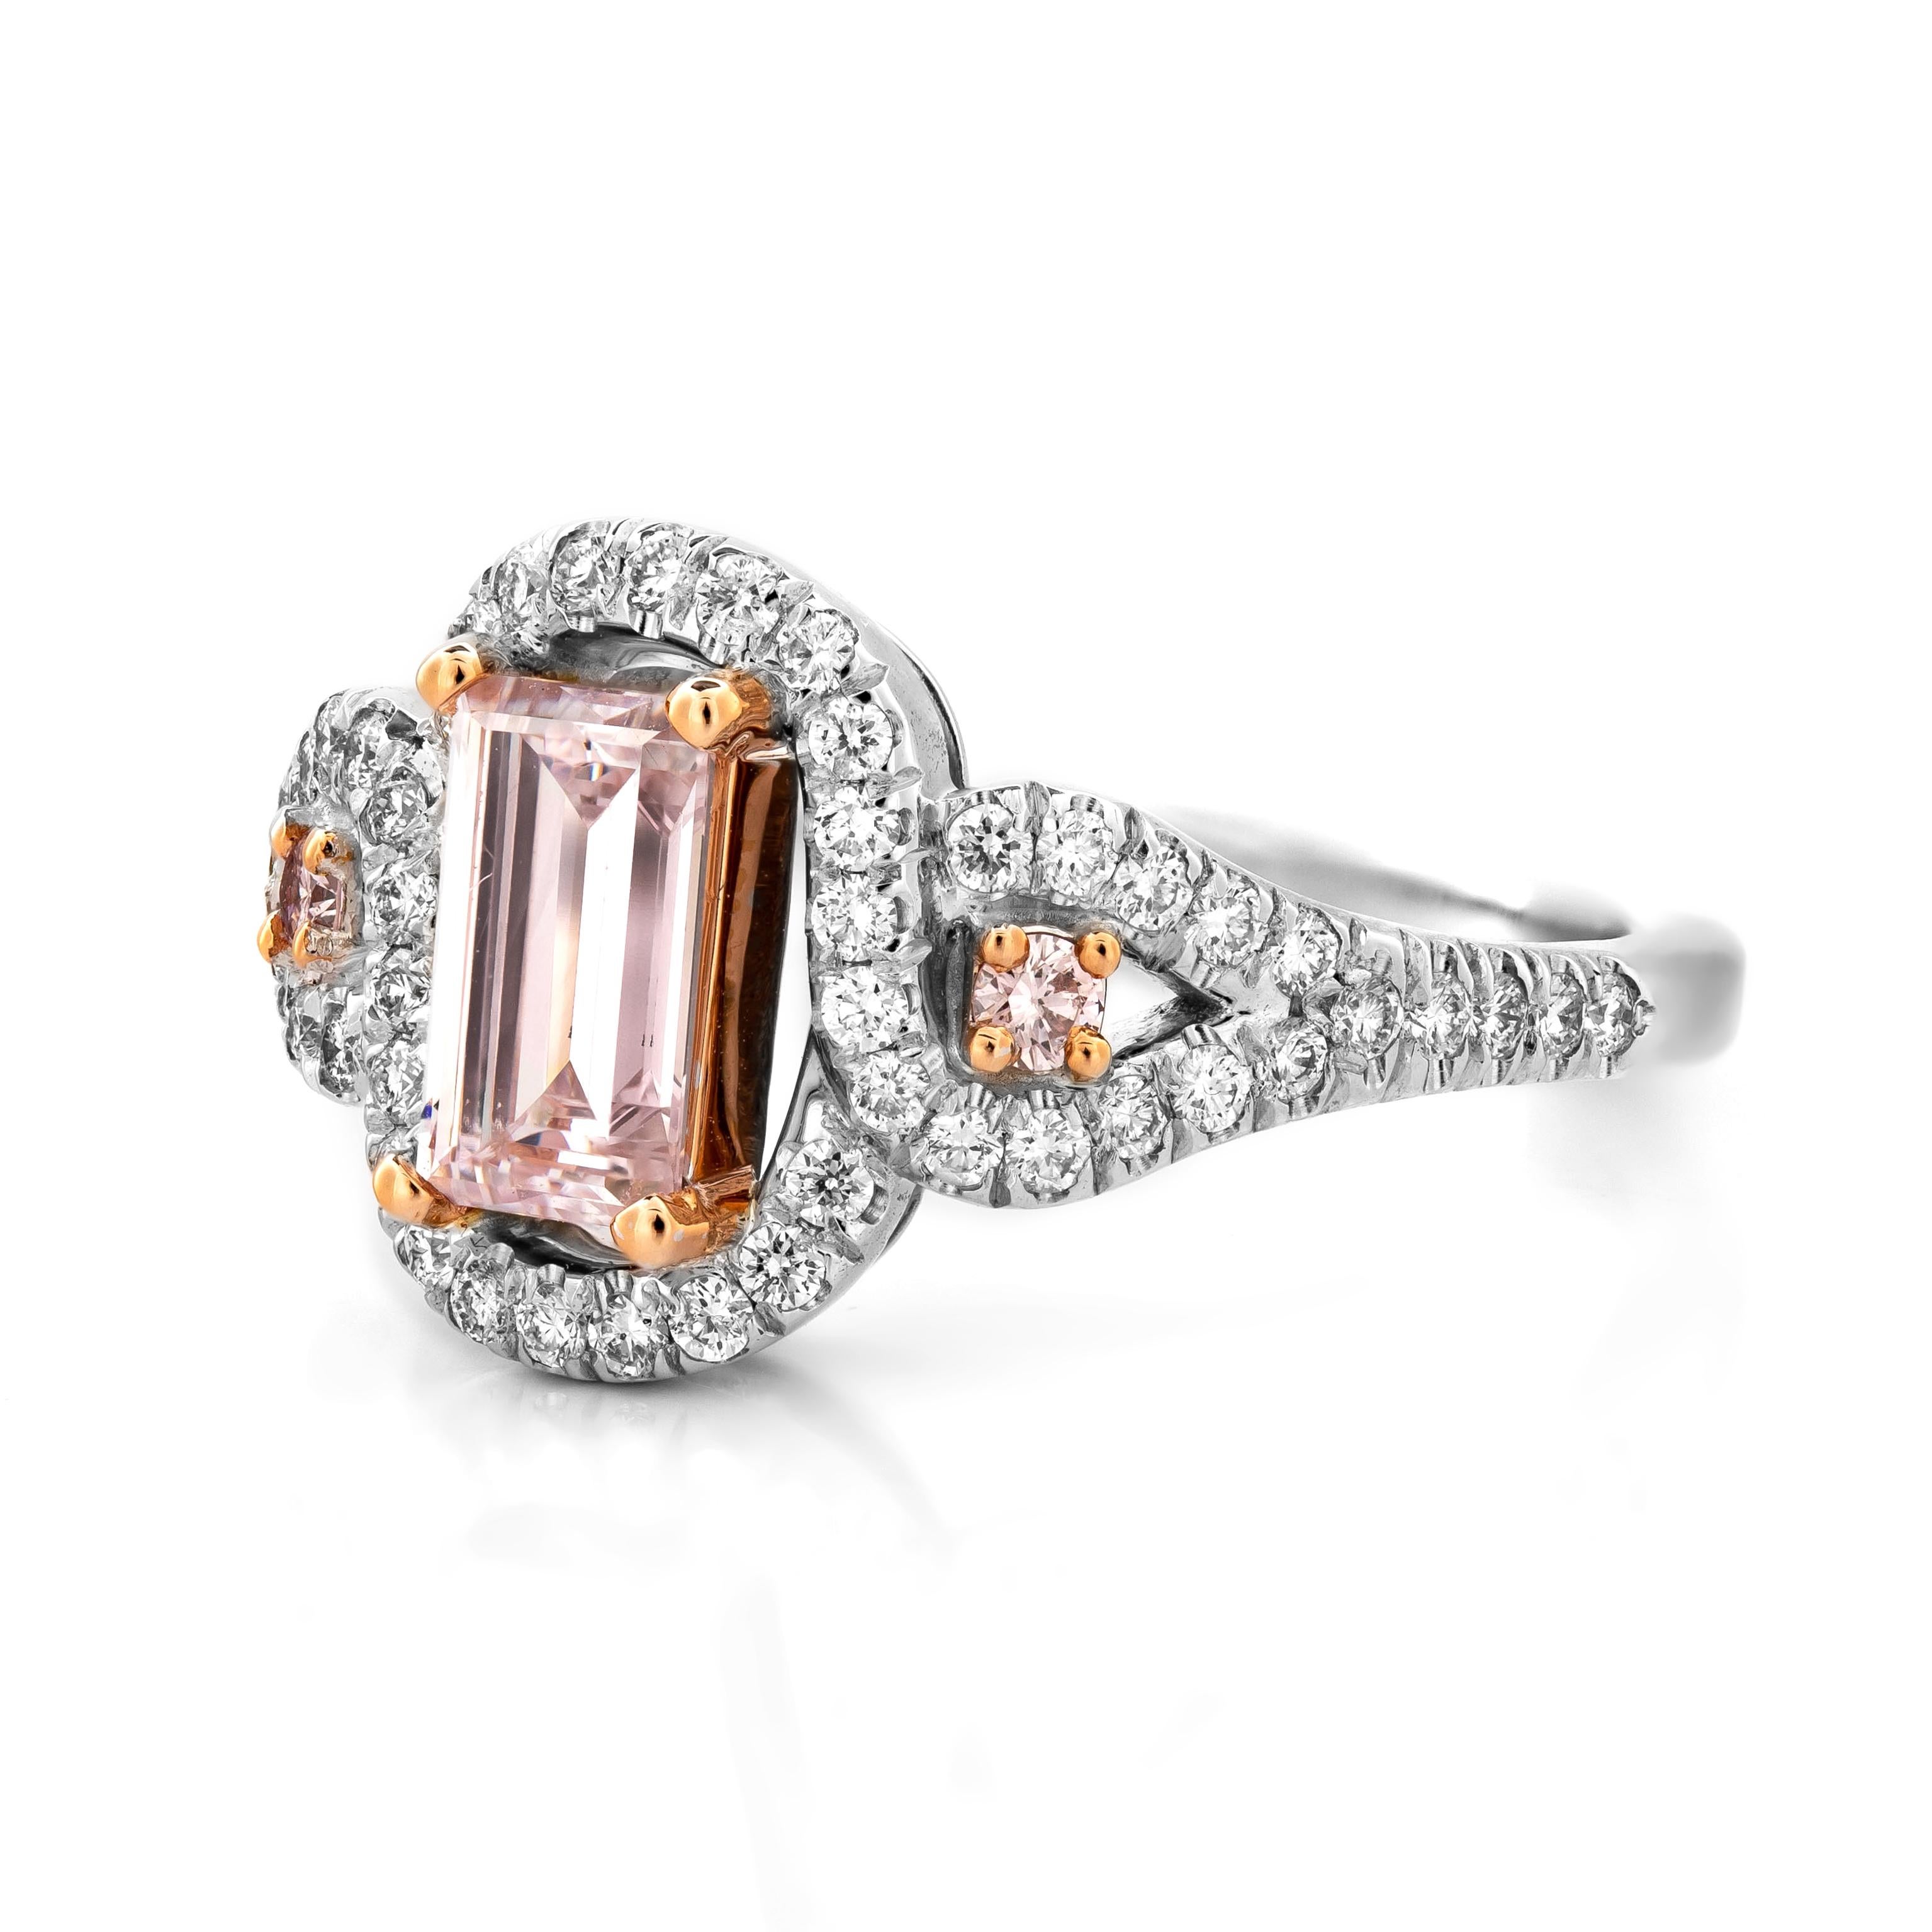 Women's 0.83 Carat Fancy Pink Diamond Ring Certified by HRD Antwerp and GWlabs